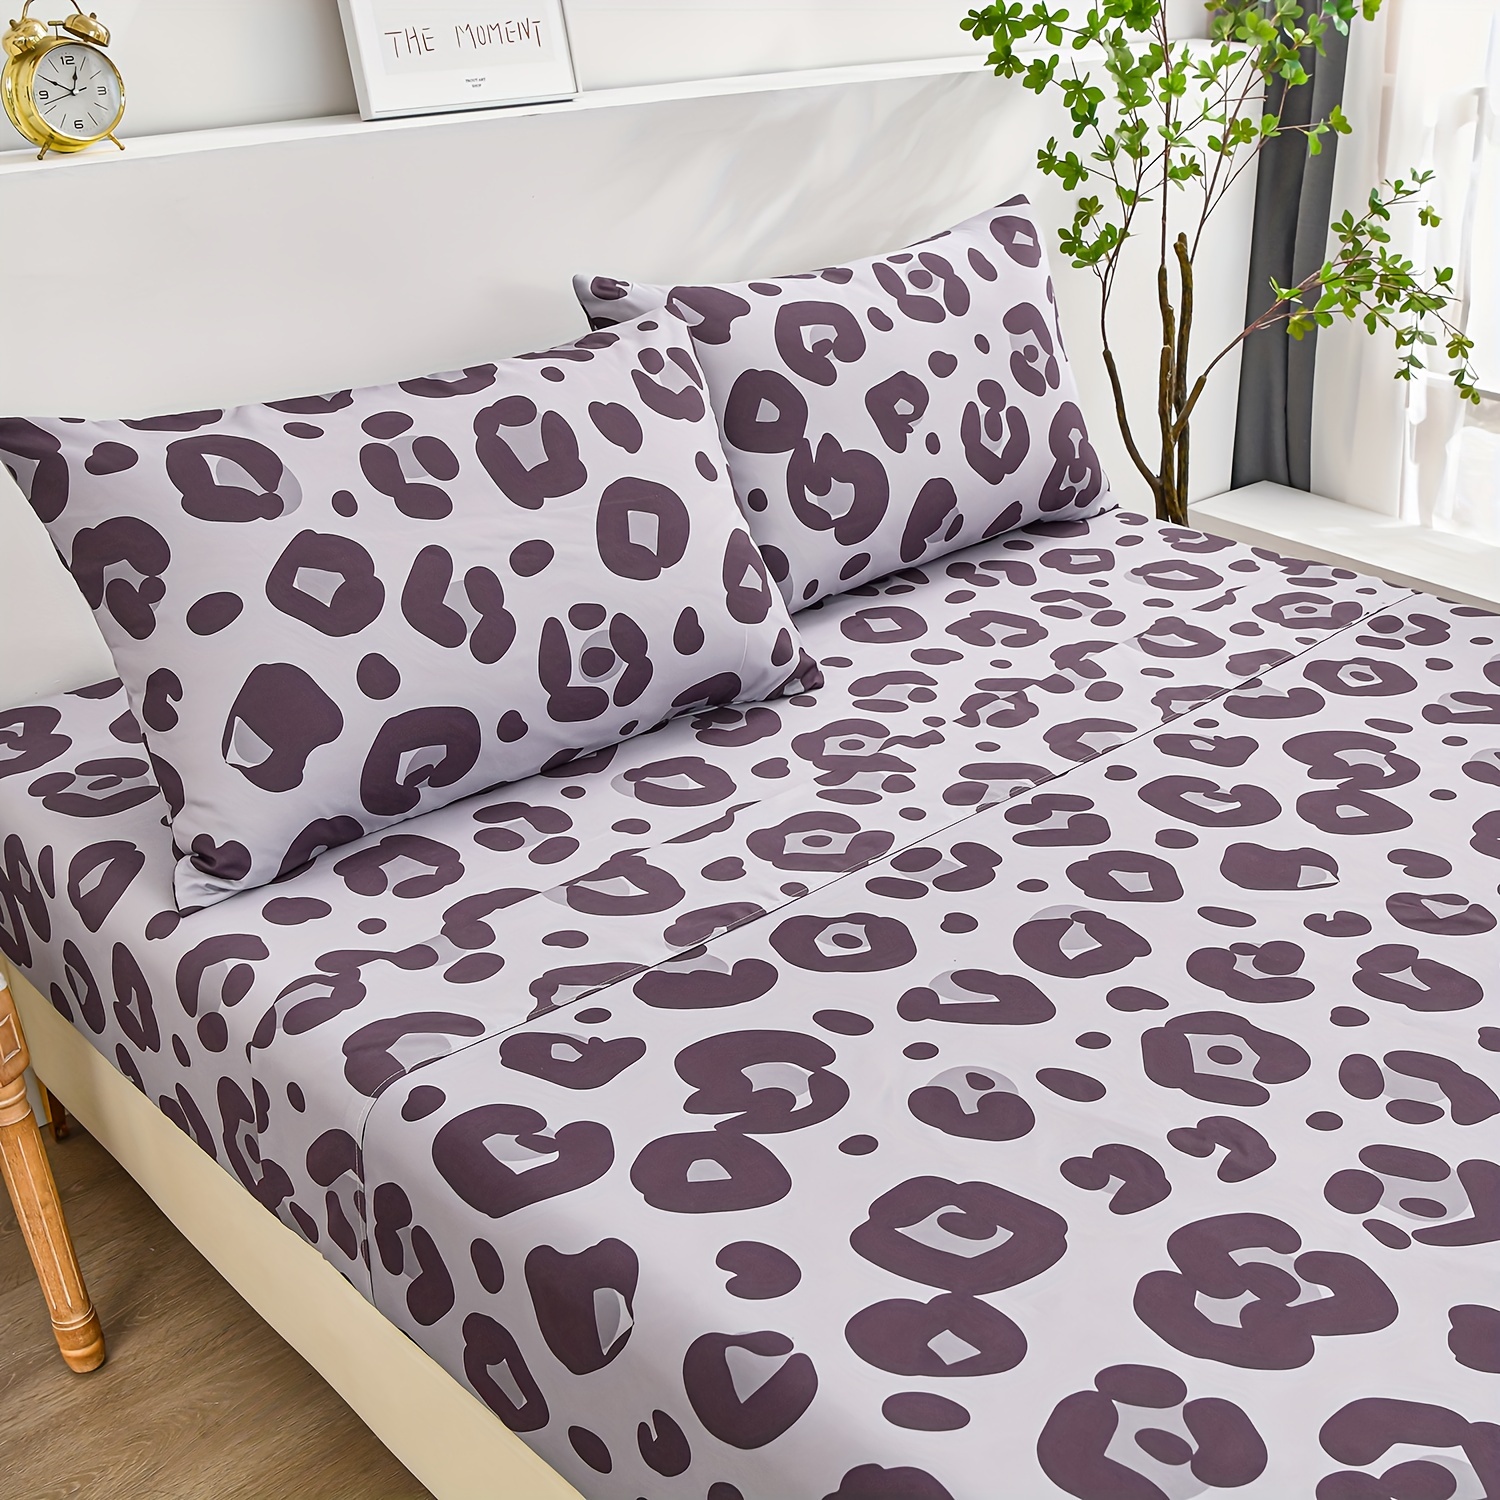 Pink Leopard Print Comforter Set Full Size,Cheetah Bedding Set 3pcs for  Kids Teens Girls Adults Room Decor,Wild Animal Skin Texture Quilt Set  Romantic